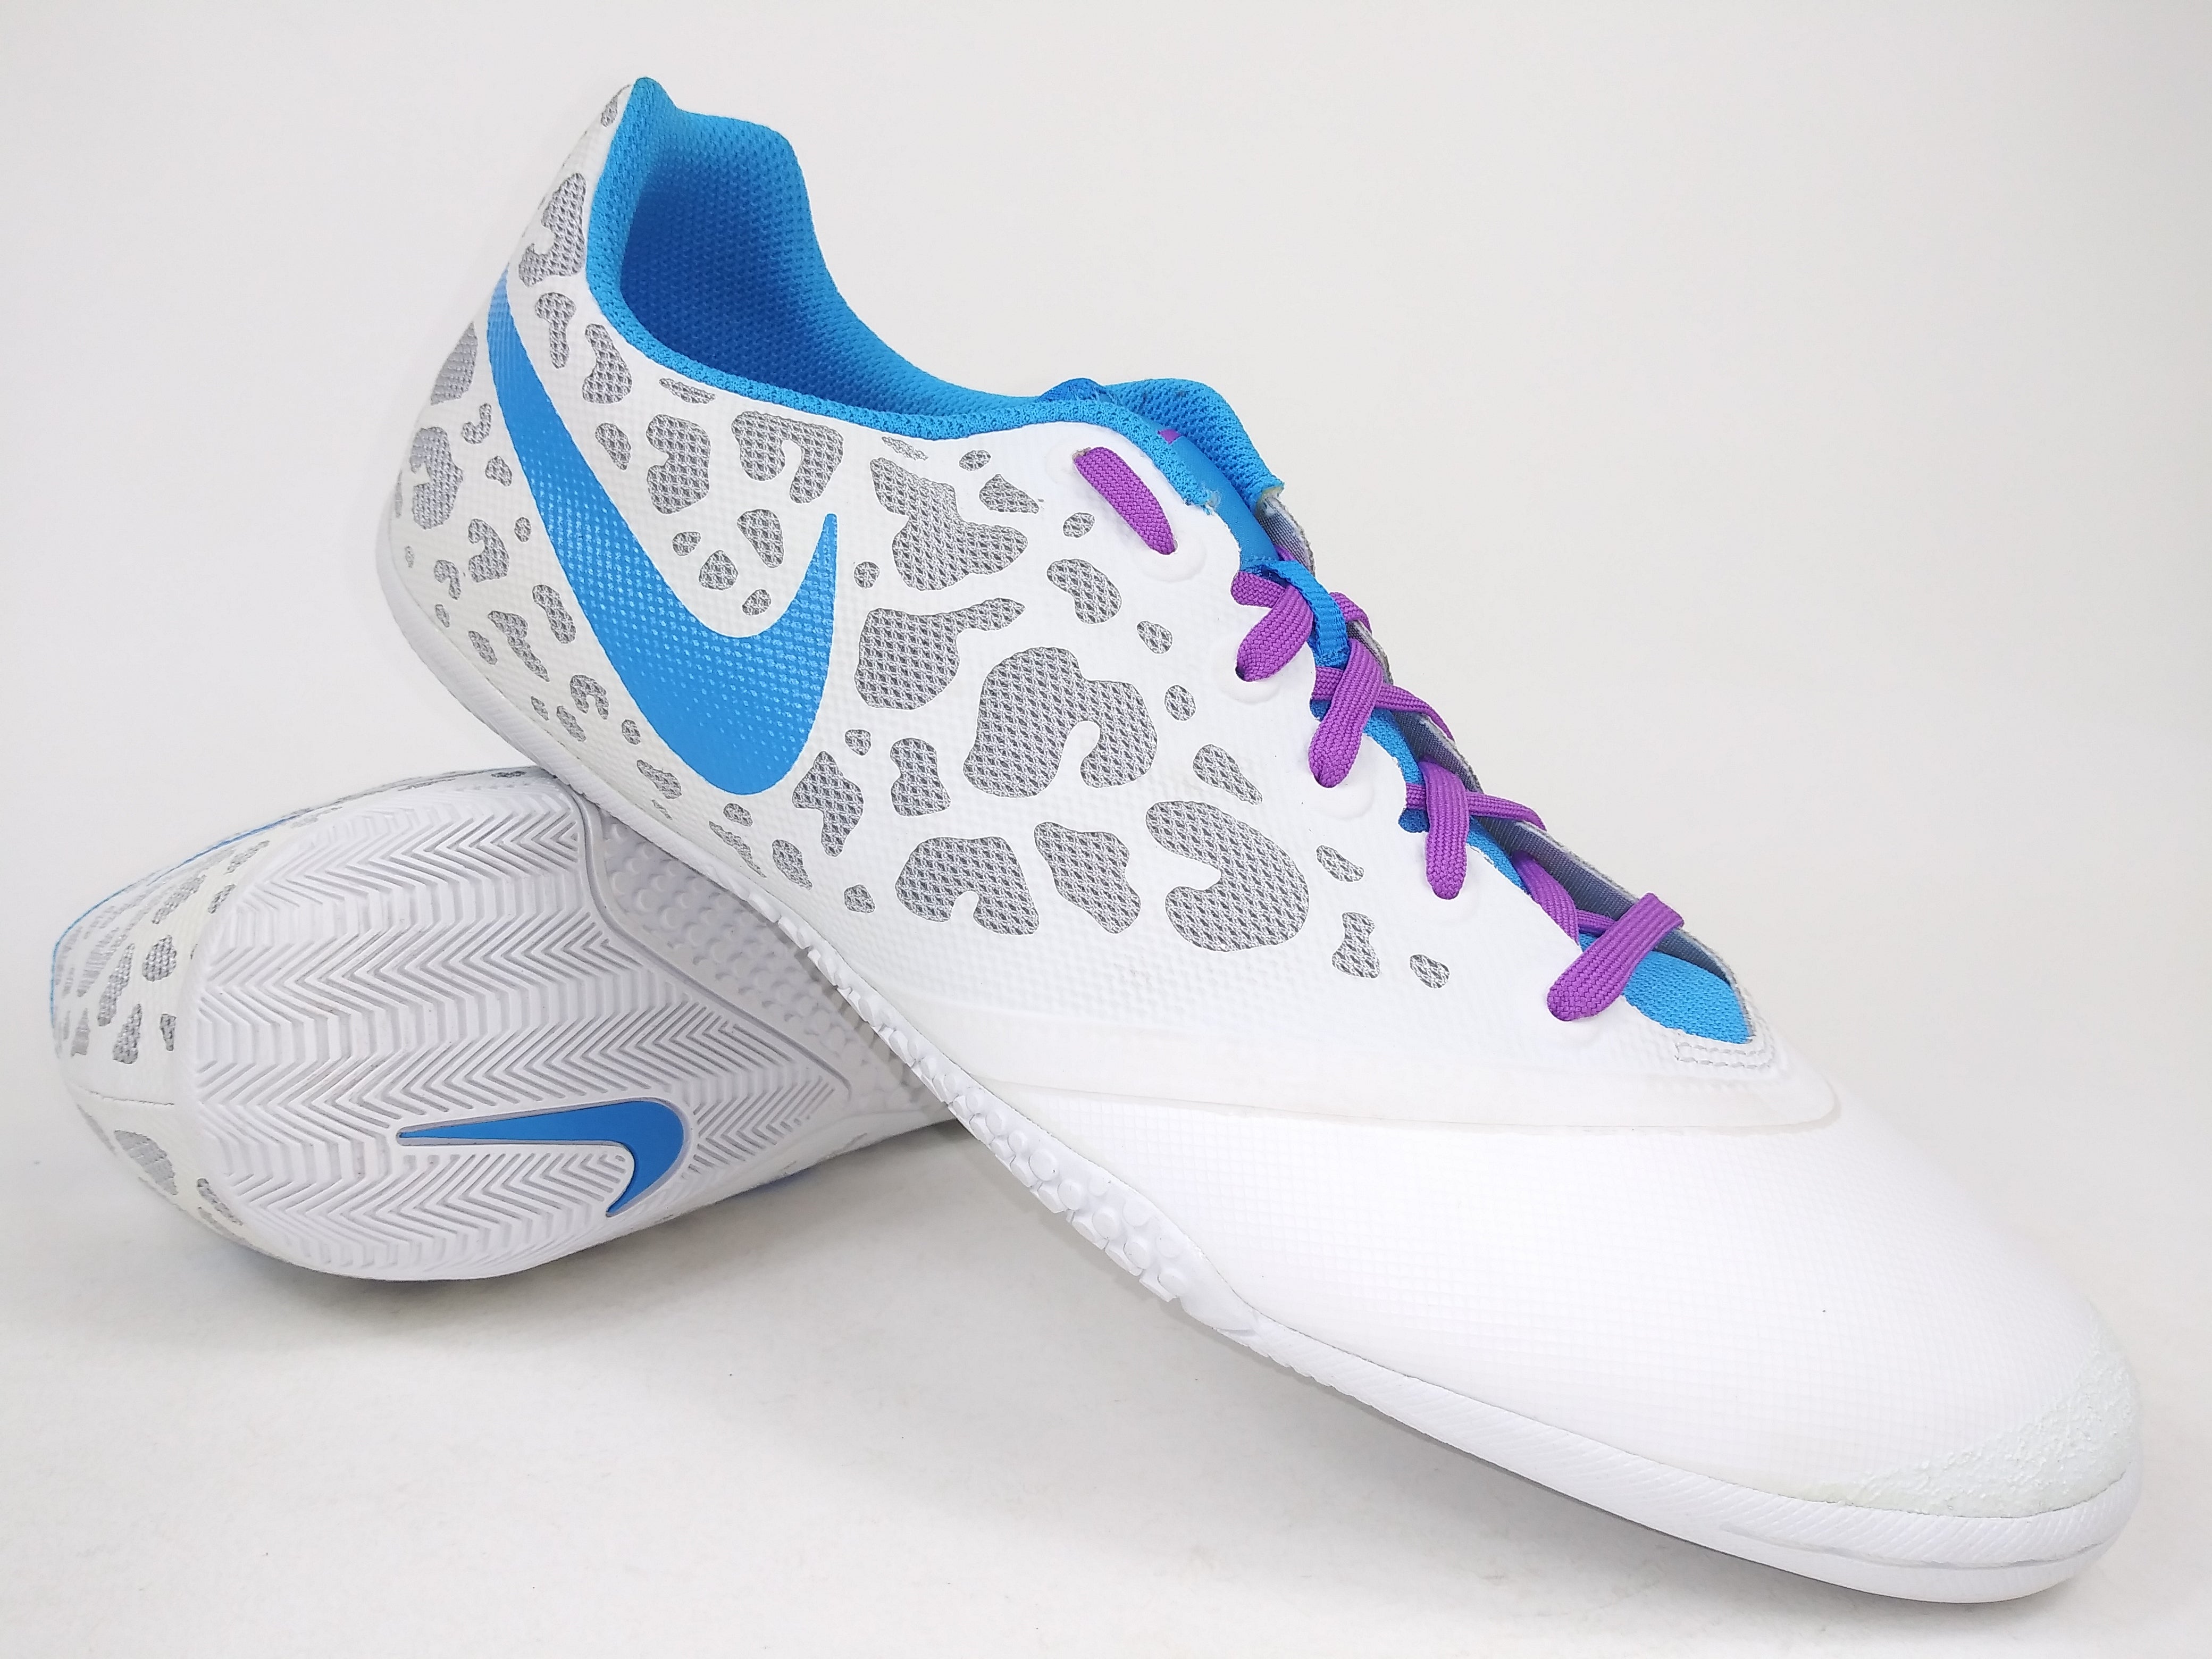 Samengesteld landelijk ethisch Nike Elastico Pro ll Indoor Shoes White Blue – Villegas Footwear